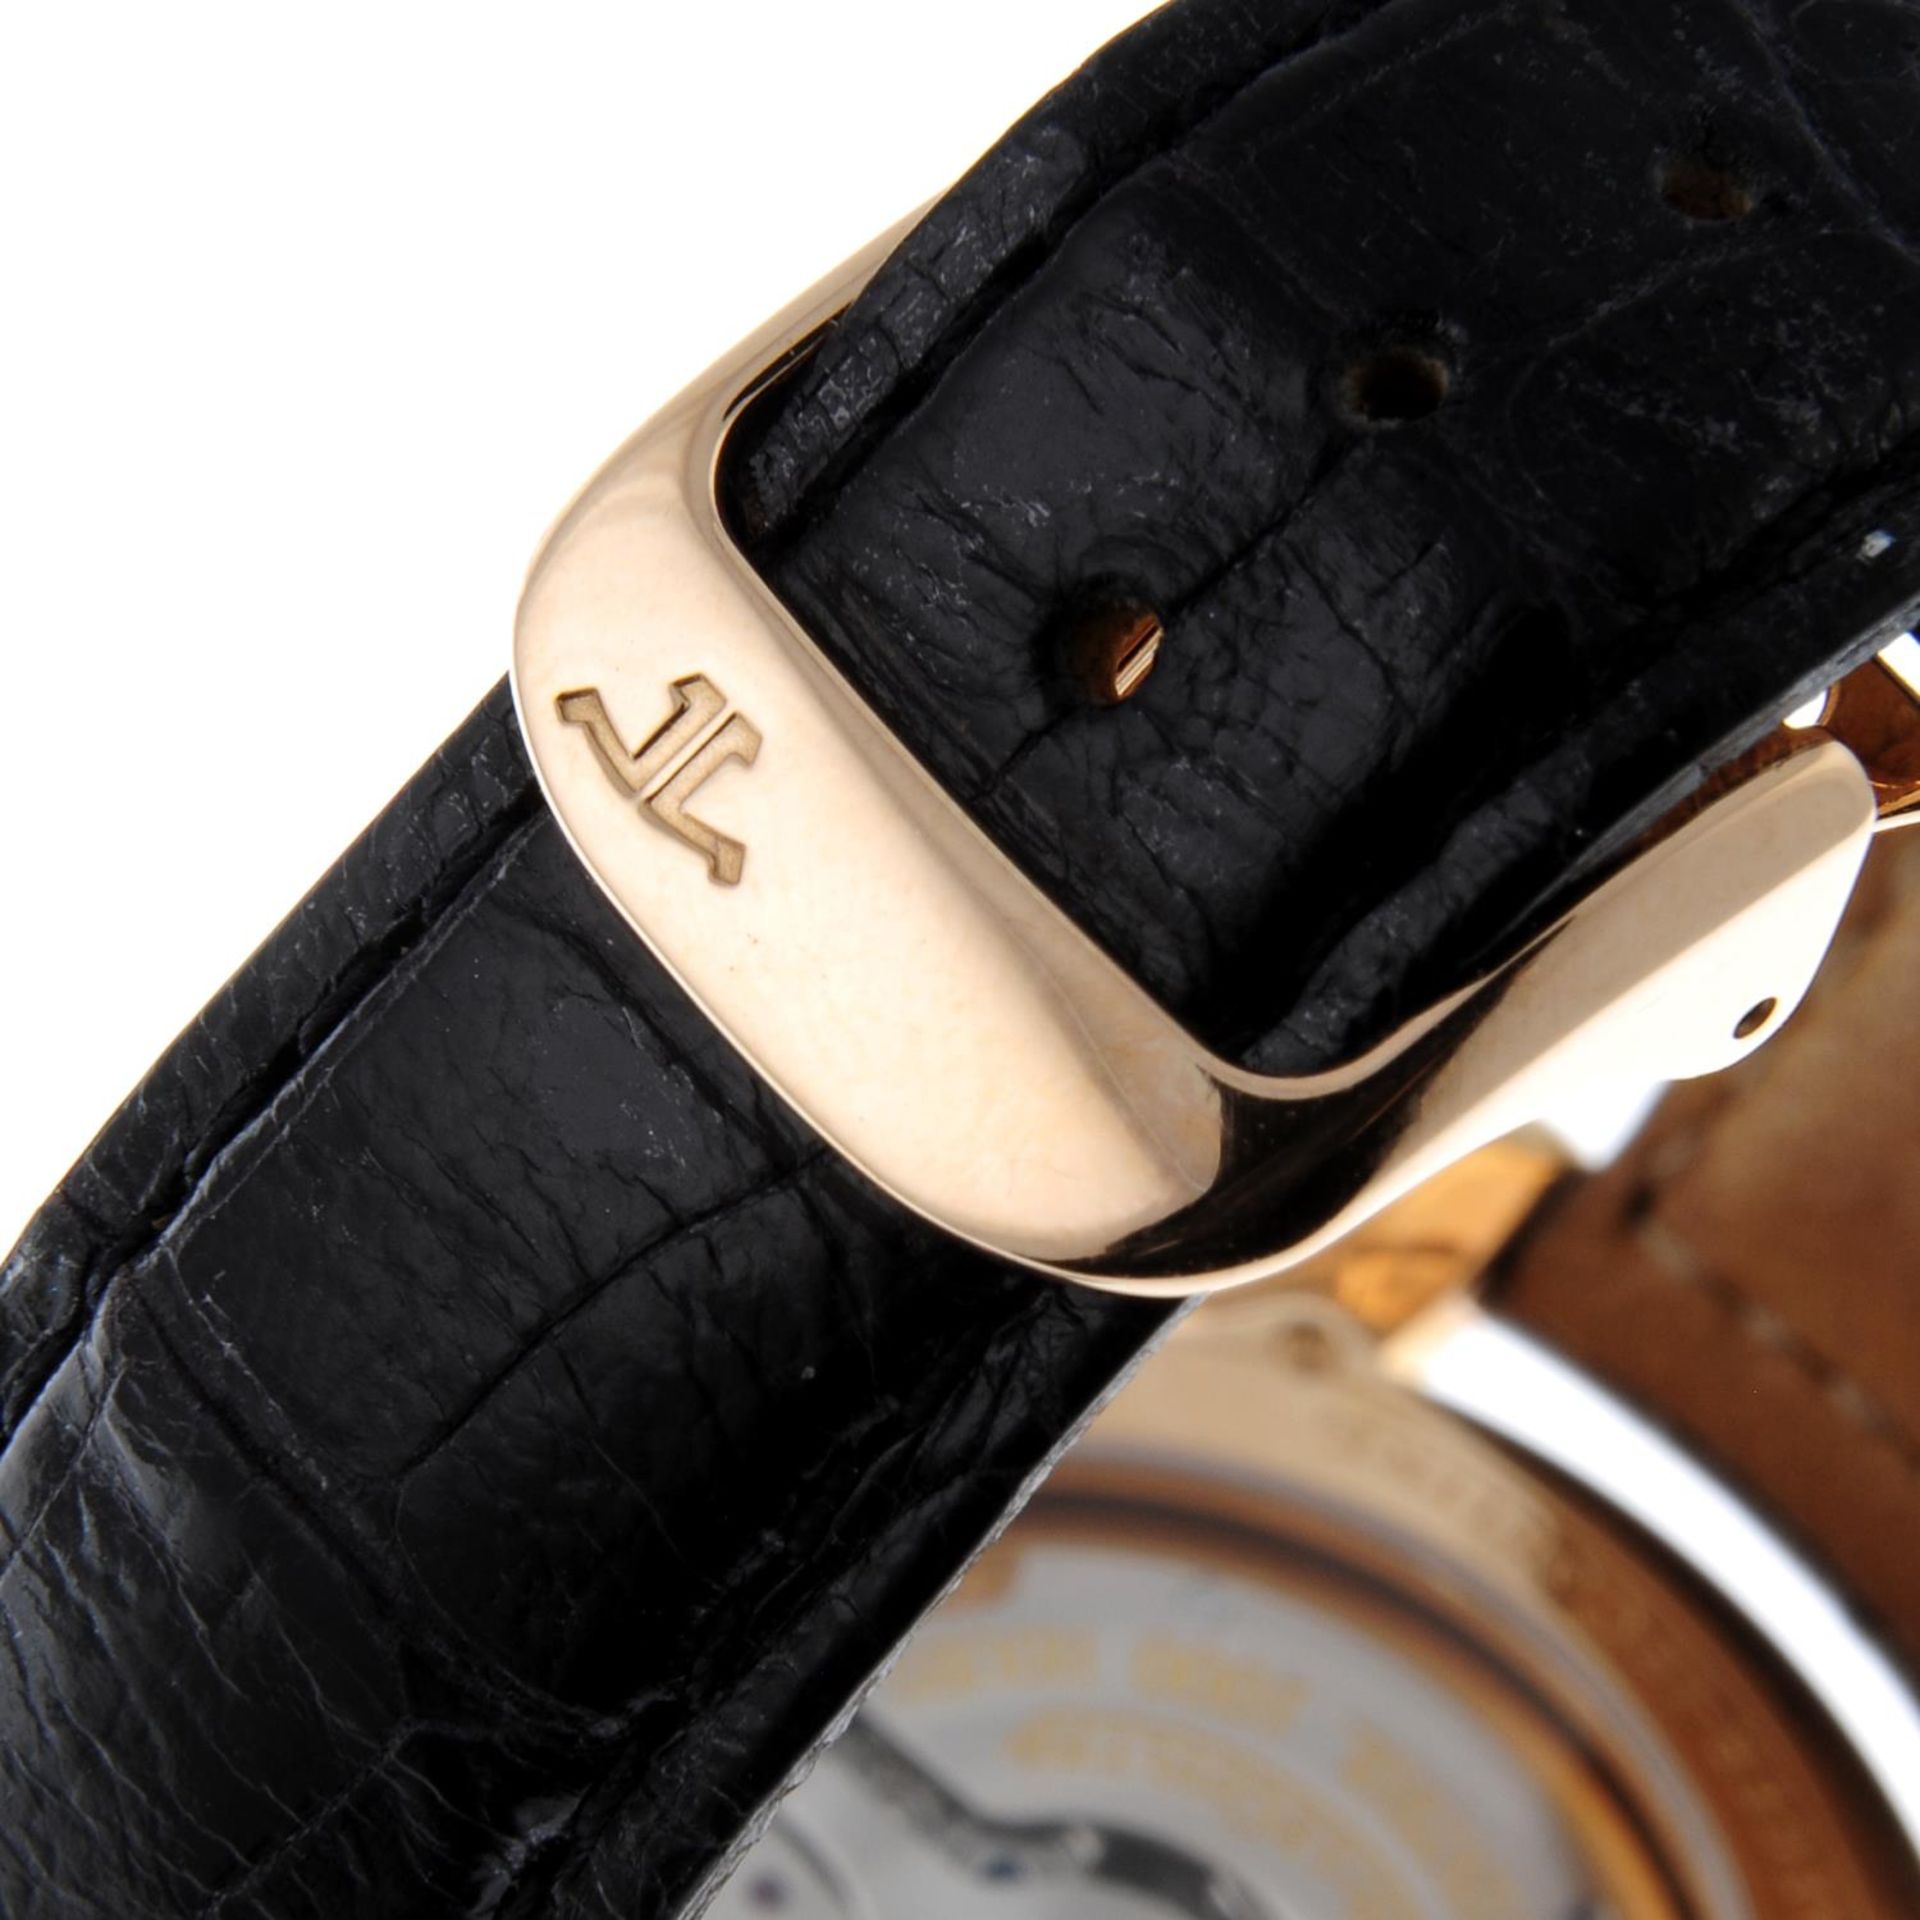 JAEGER-LECOULTRE - a gentleman's Master Reserve De Marche wrist watch. - Image 4 of 5